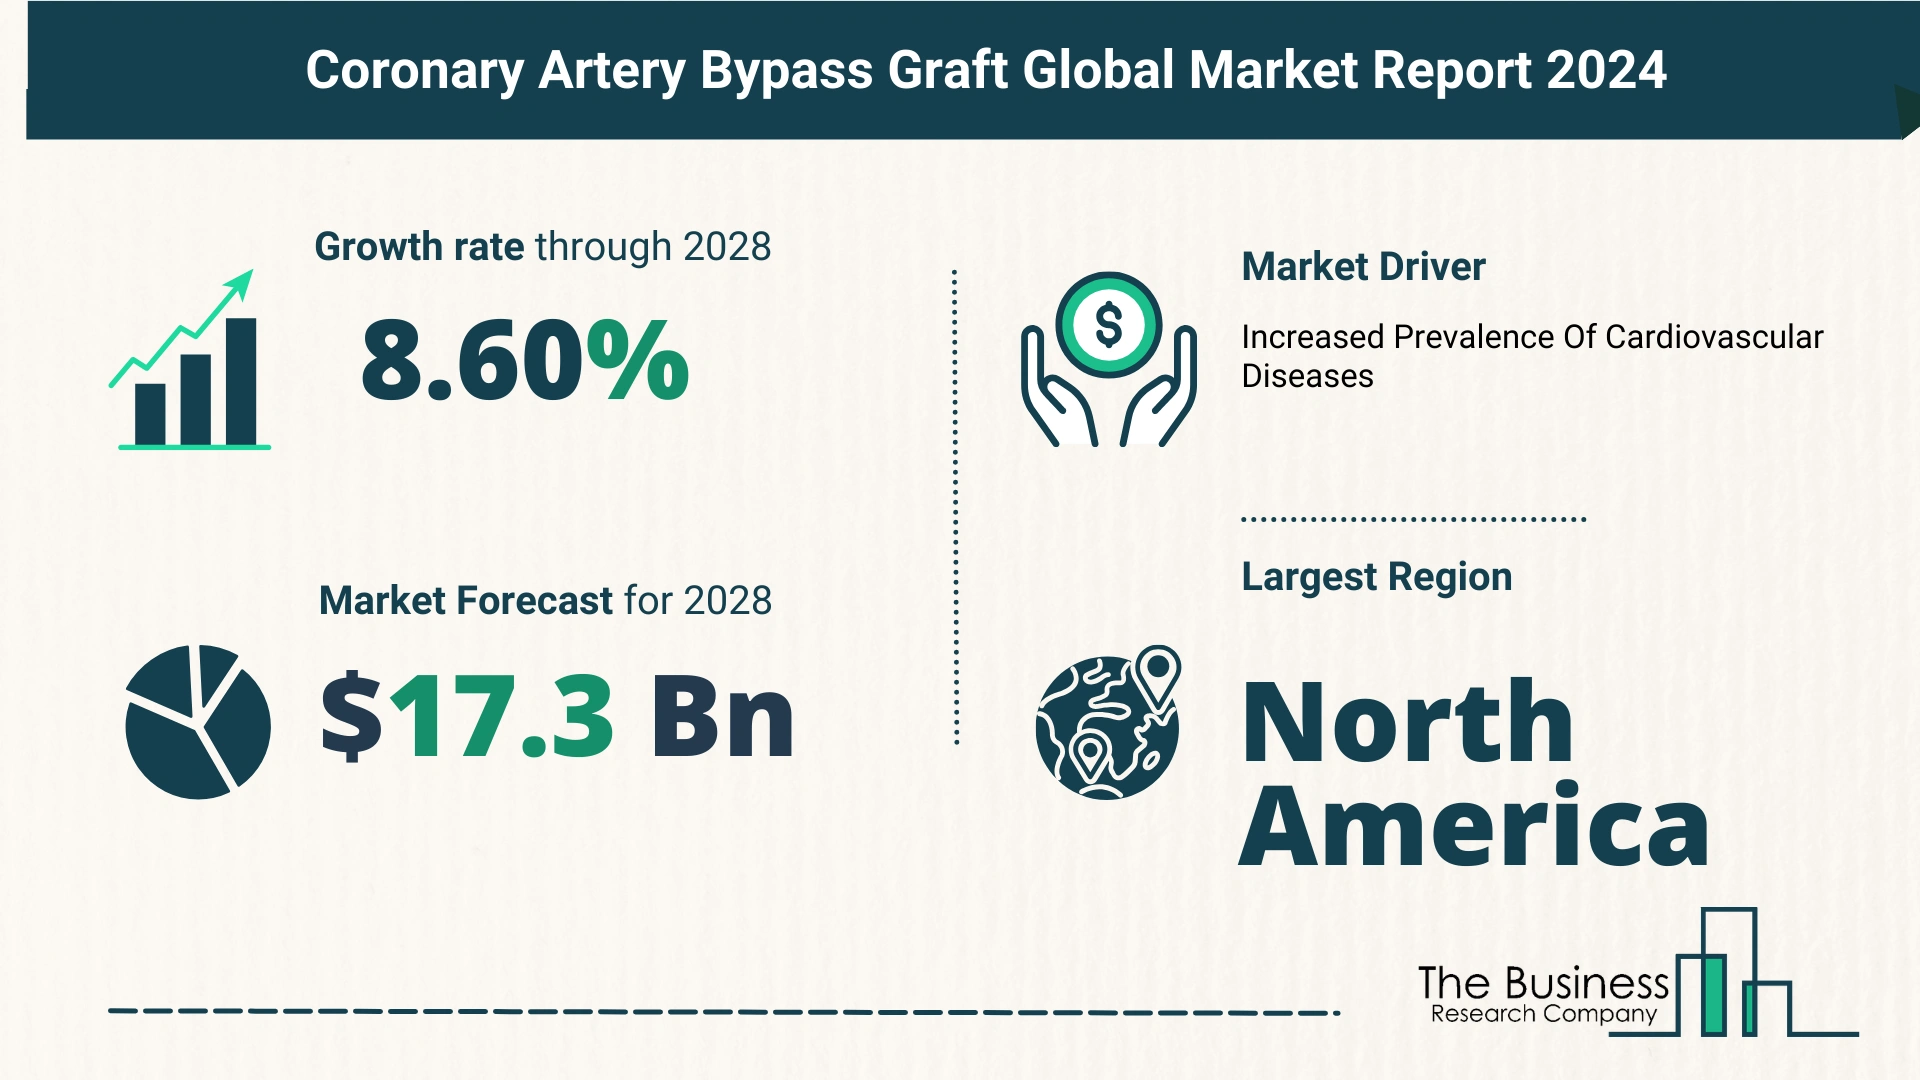 Key Takeaways From The Global Coronary Artery Bypass Graft Market Forecast 2024